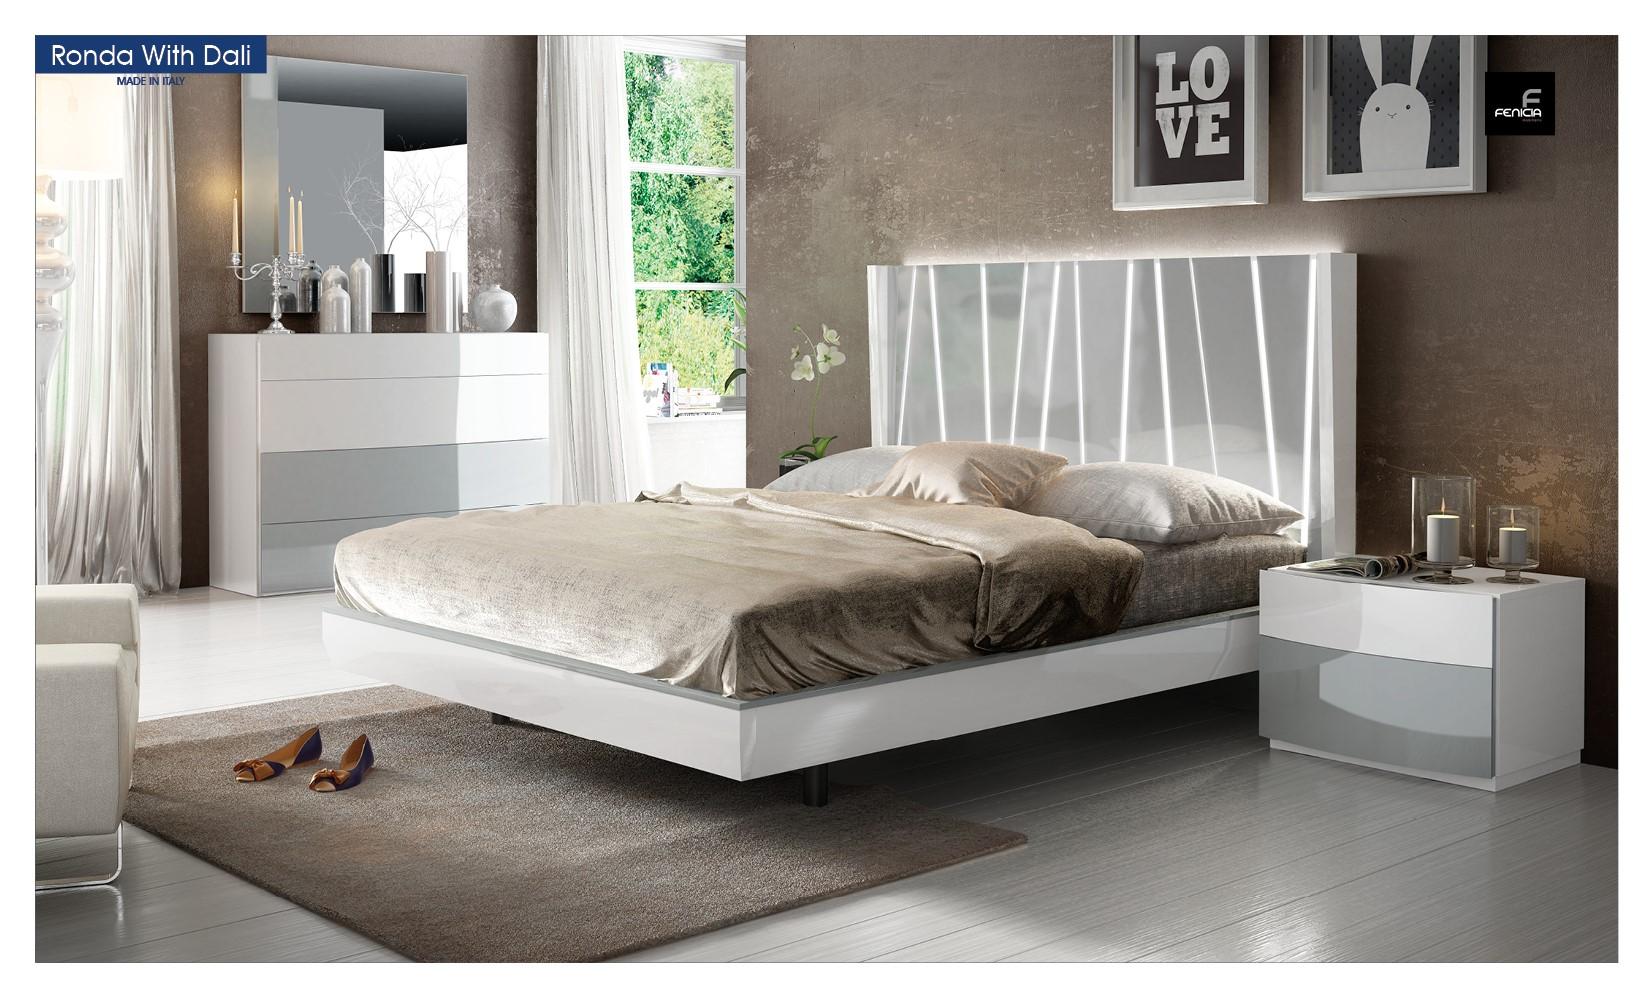 Contemporary Platform Bedroom Set Ronda DALI Ronda With Dali-Q-2N-3PC in White, Gray High Gloss Lacquer